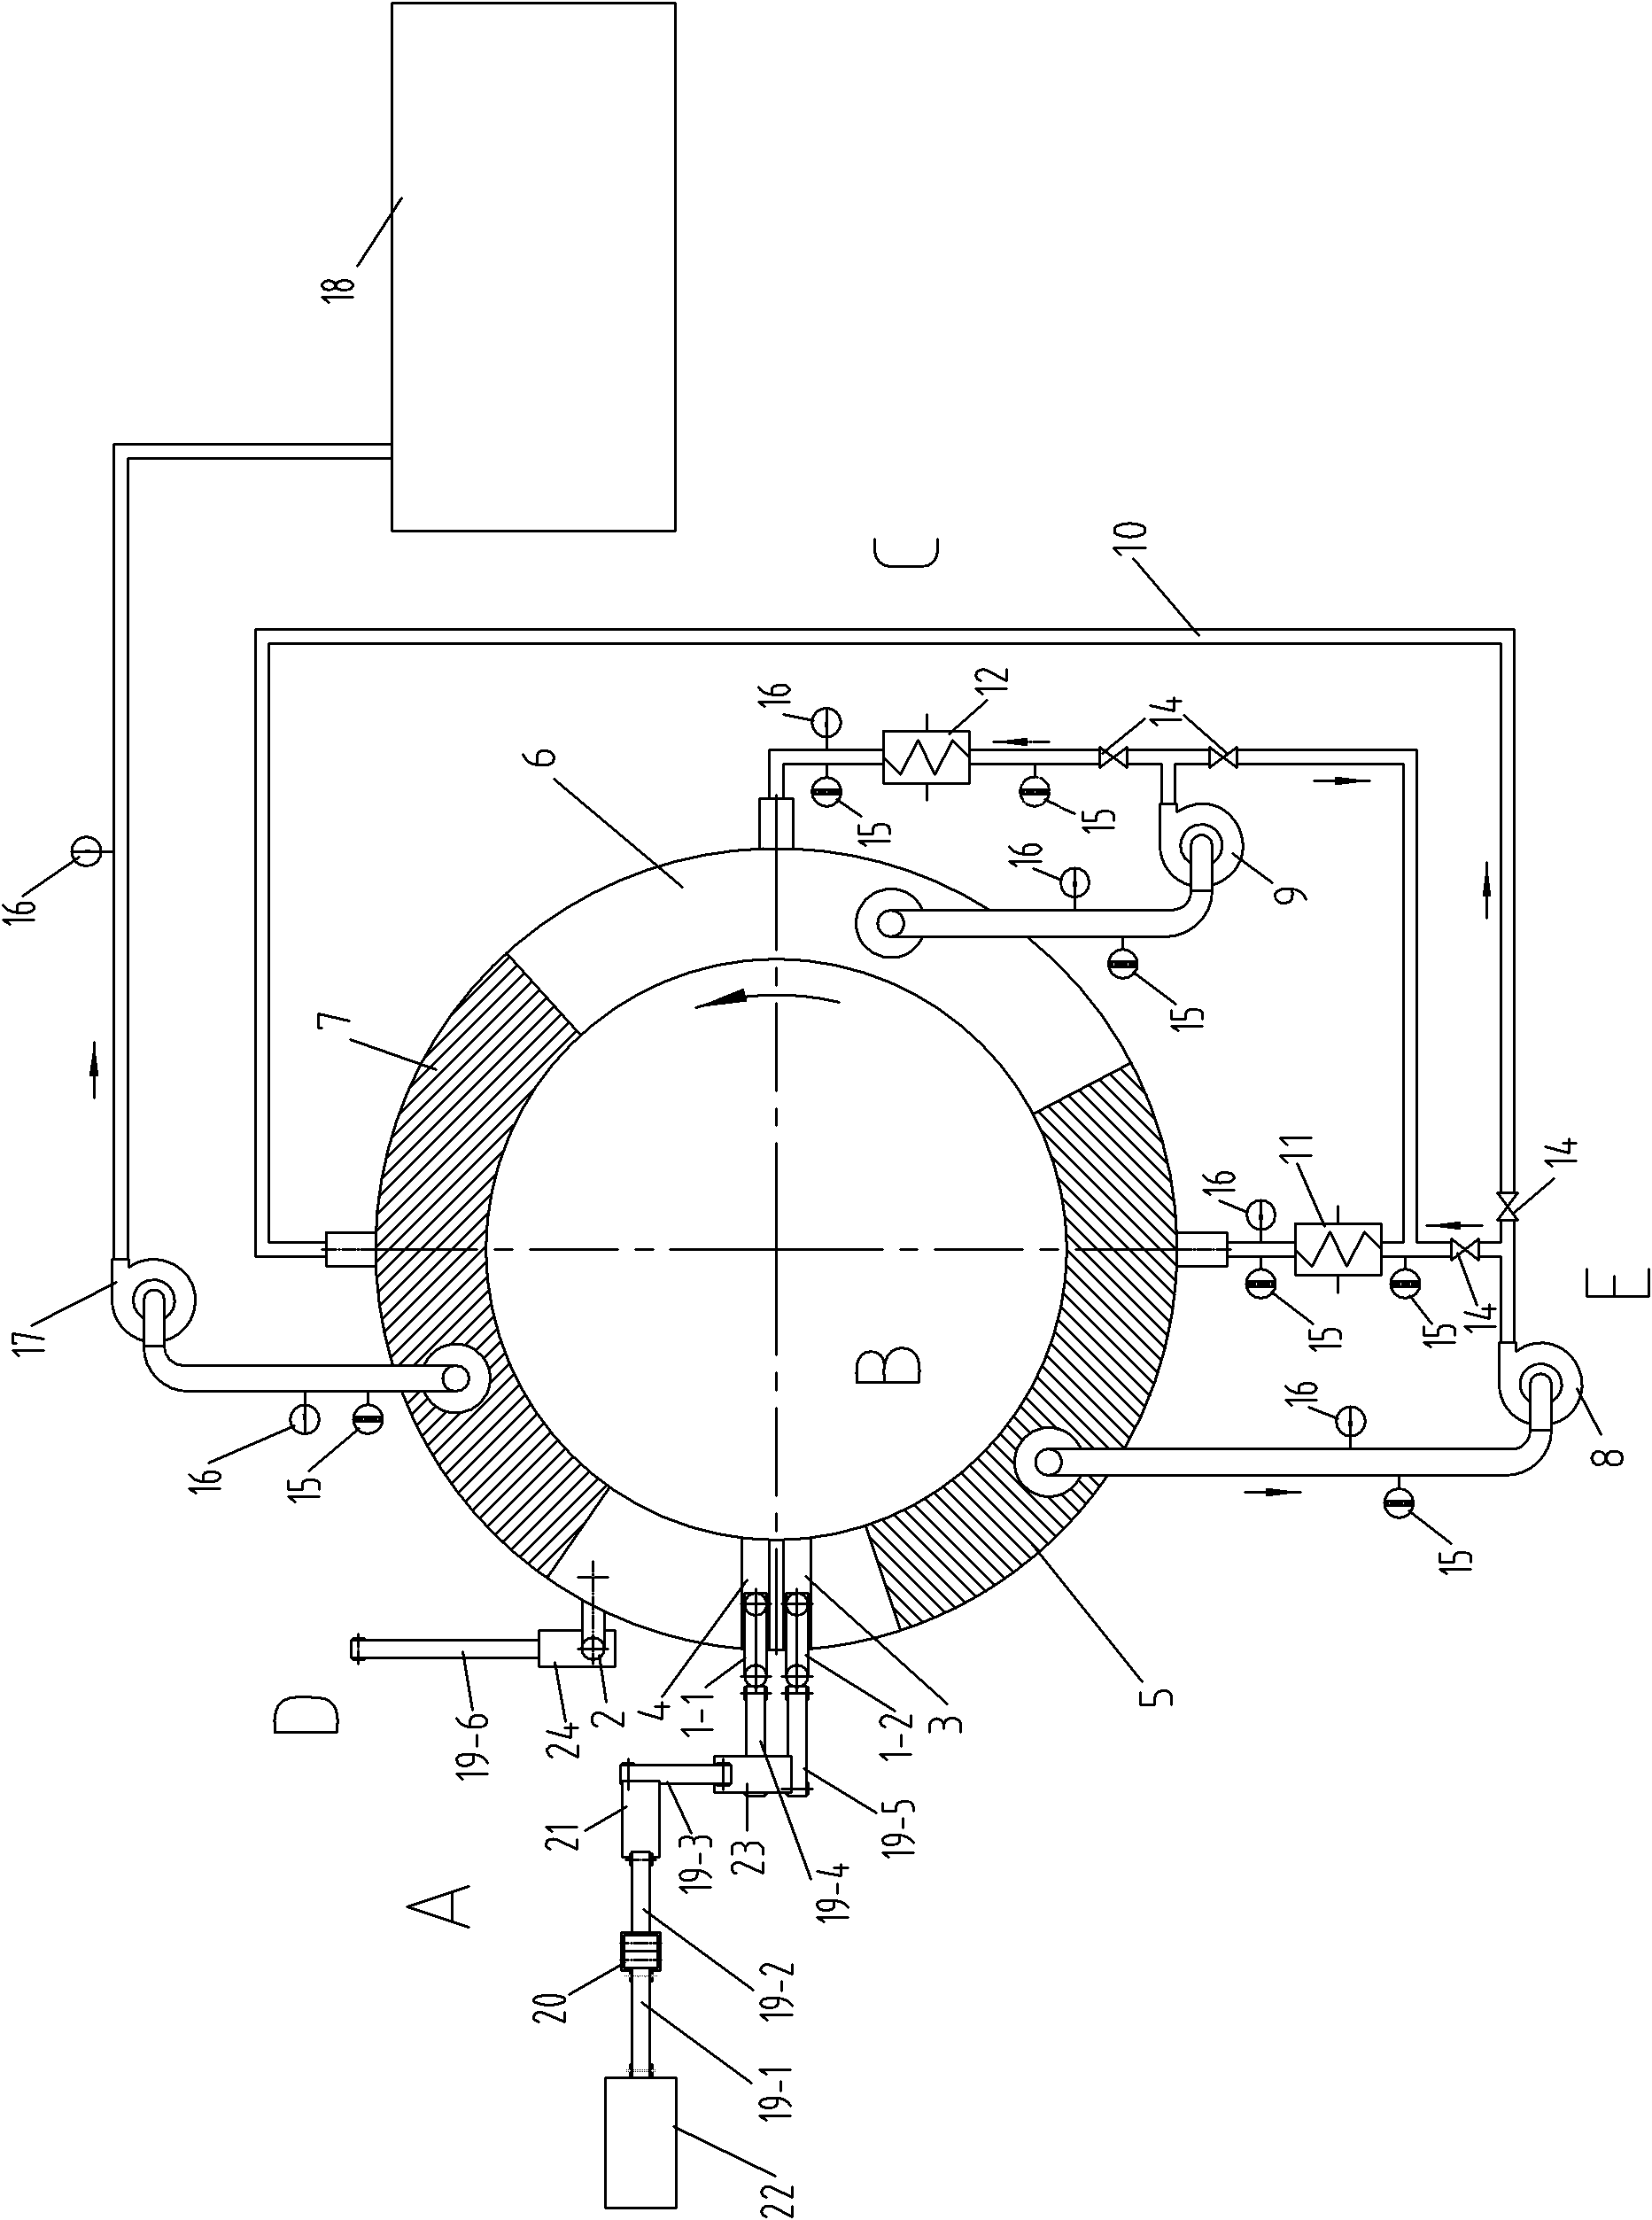 Dry distillation system for oil shales